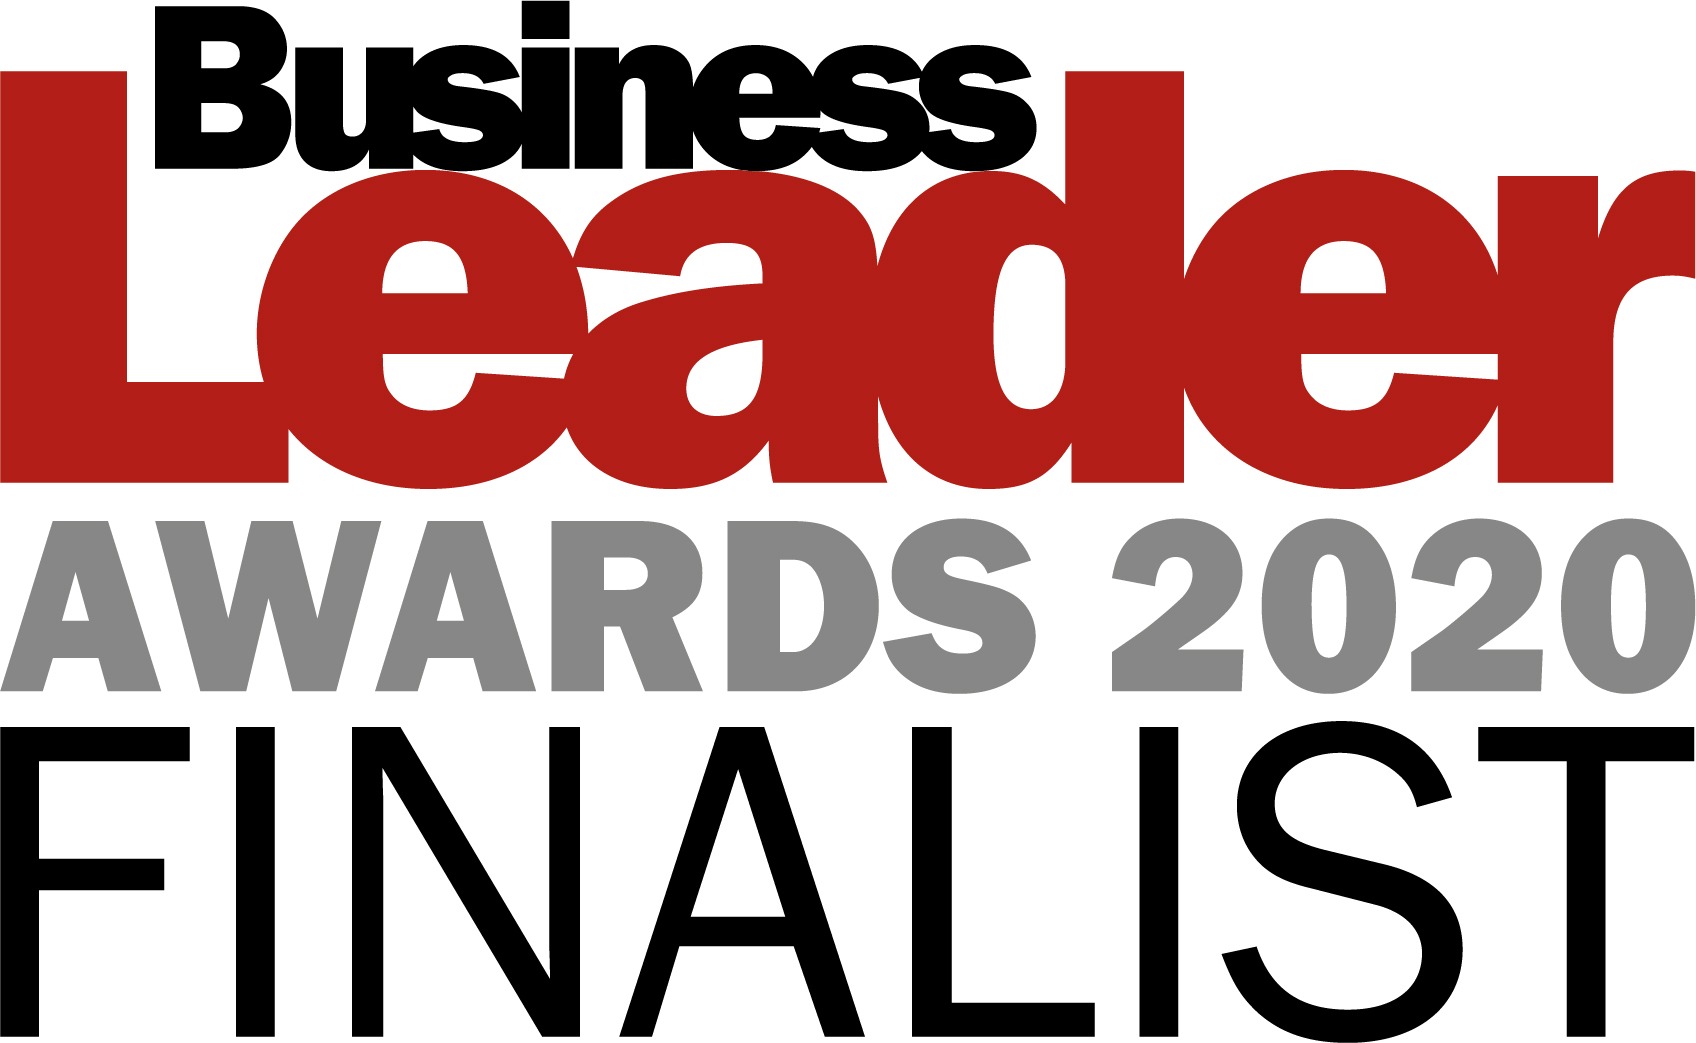 business leader awards finalist 2020